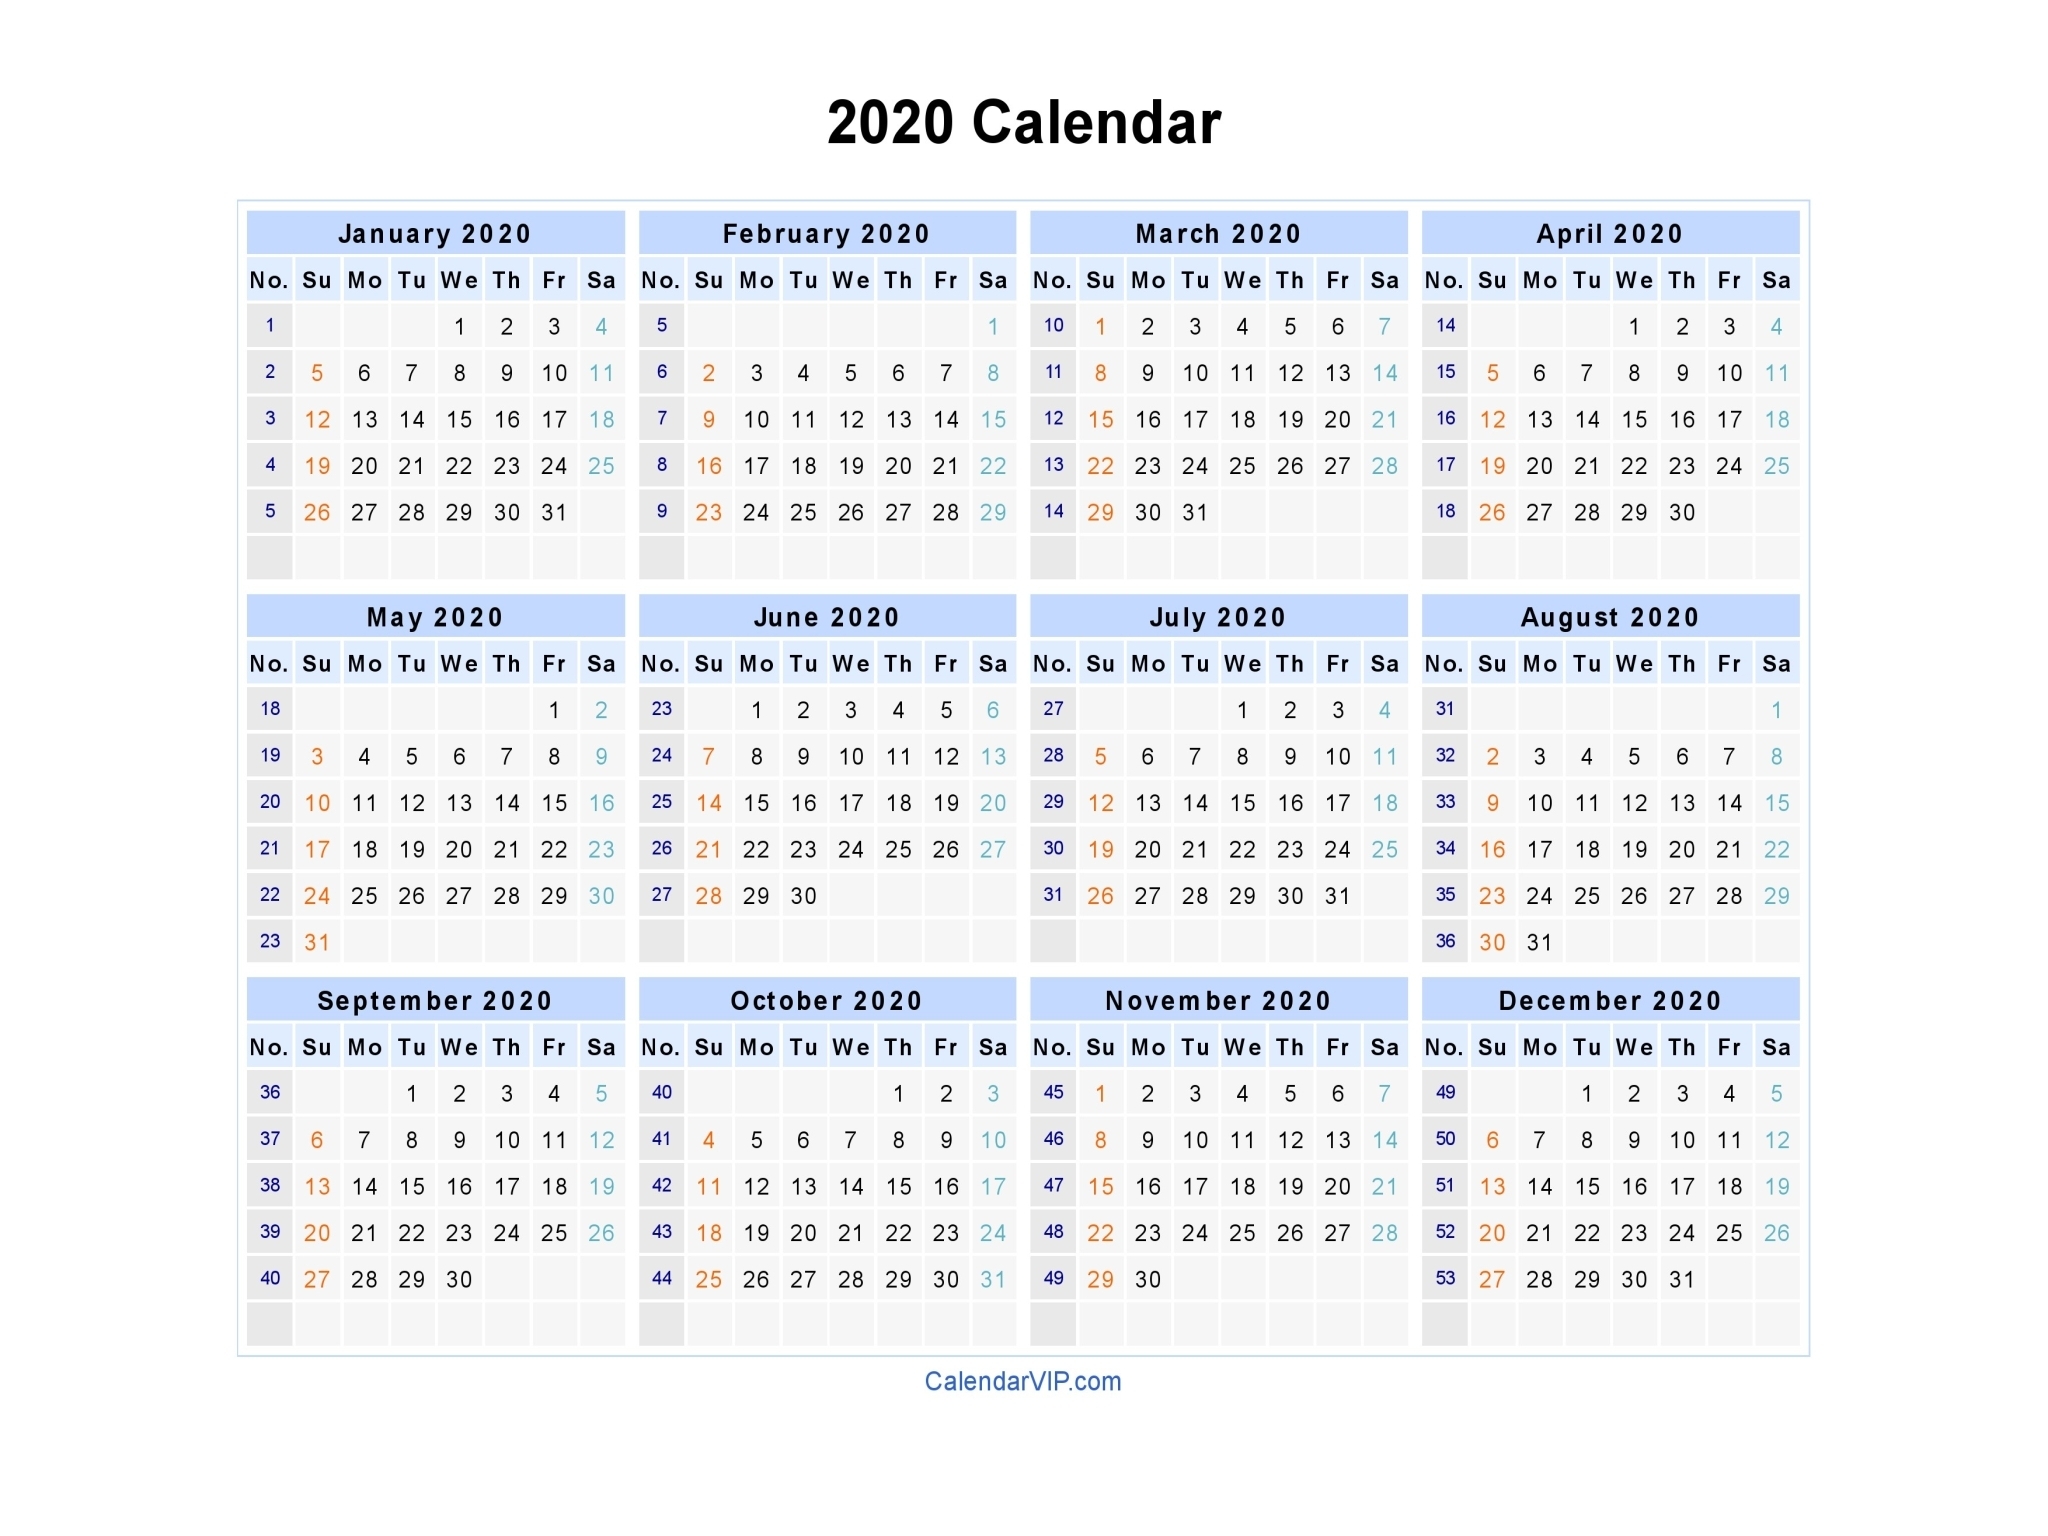 2020 Calendar - Blank Printable Calendar Template In Pdf Word Excel regarding 2020 Annual Calendar Blank